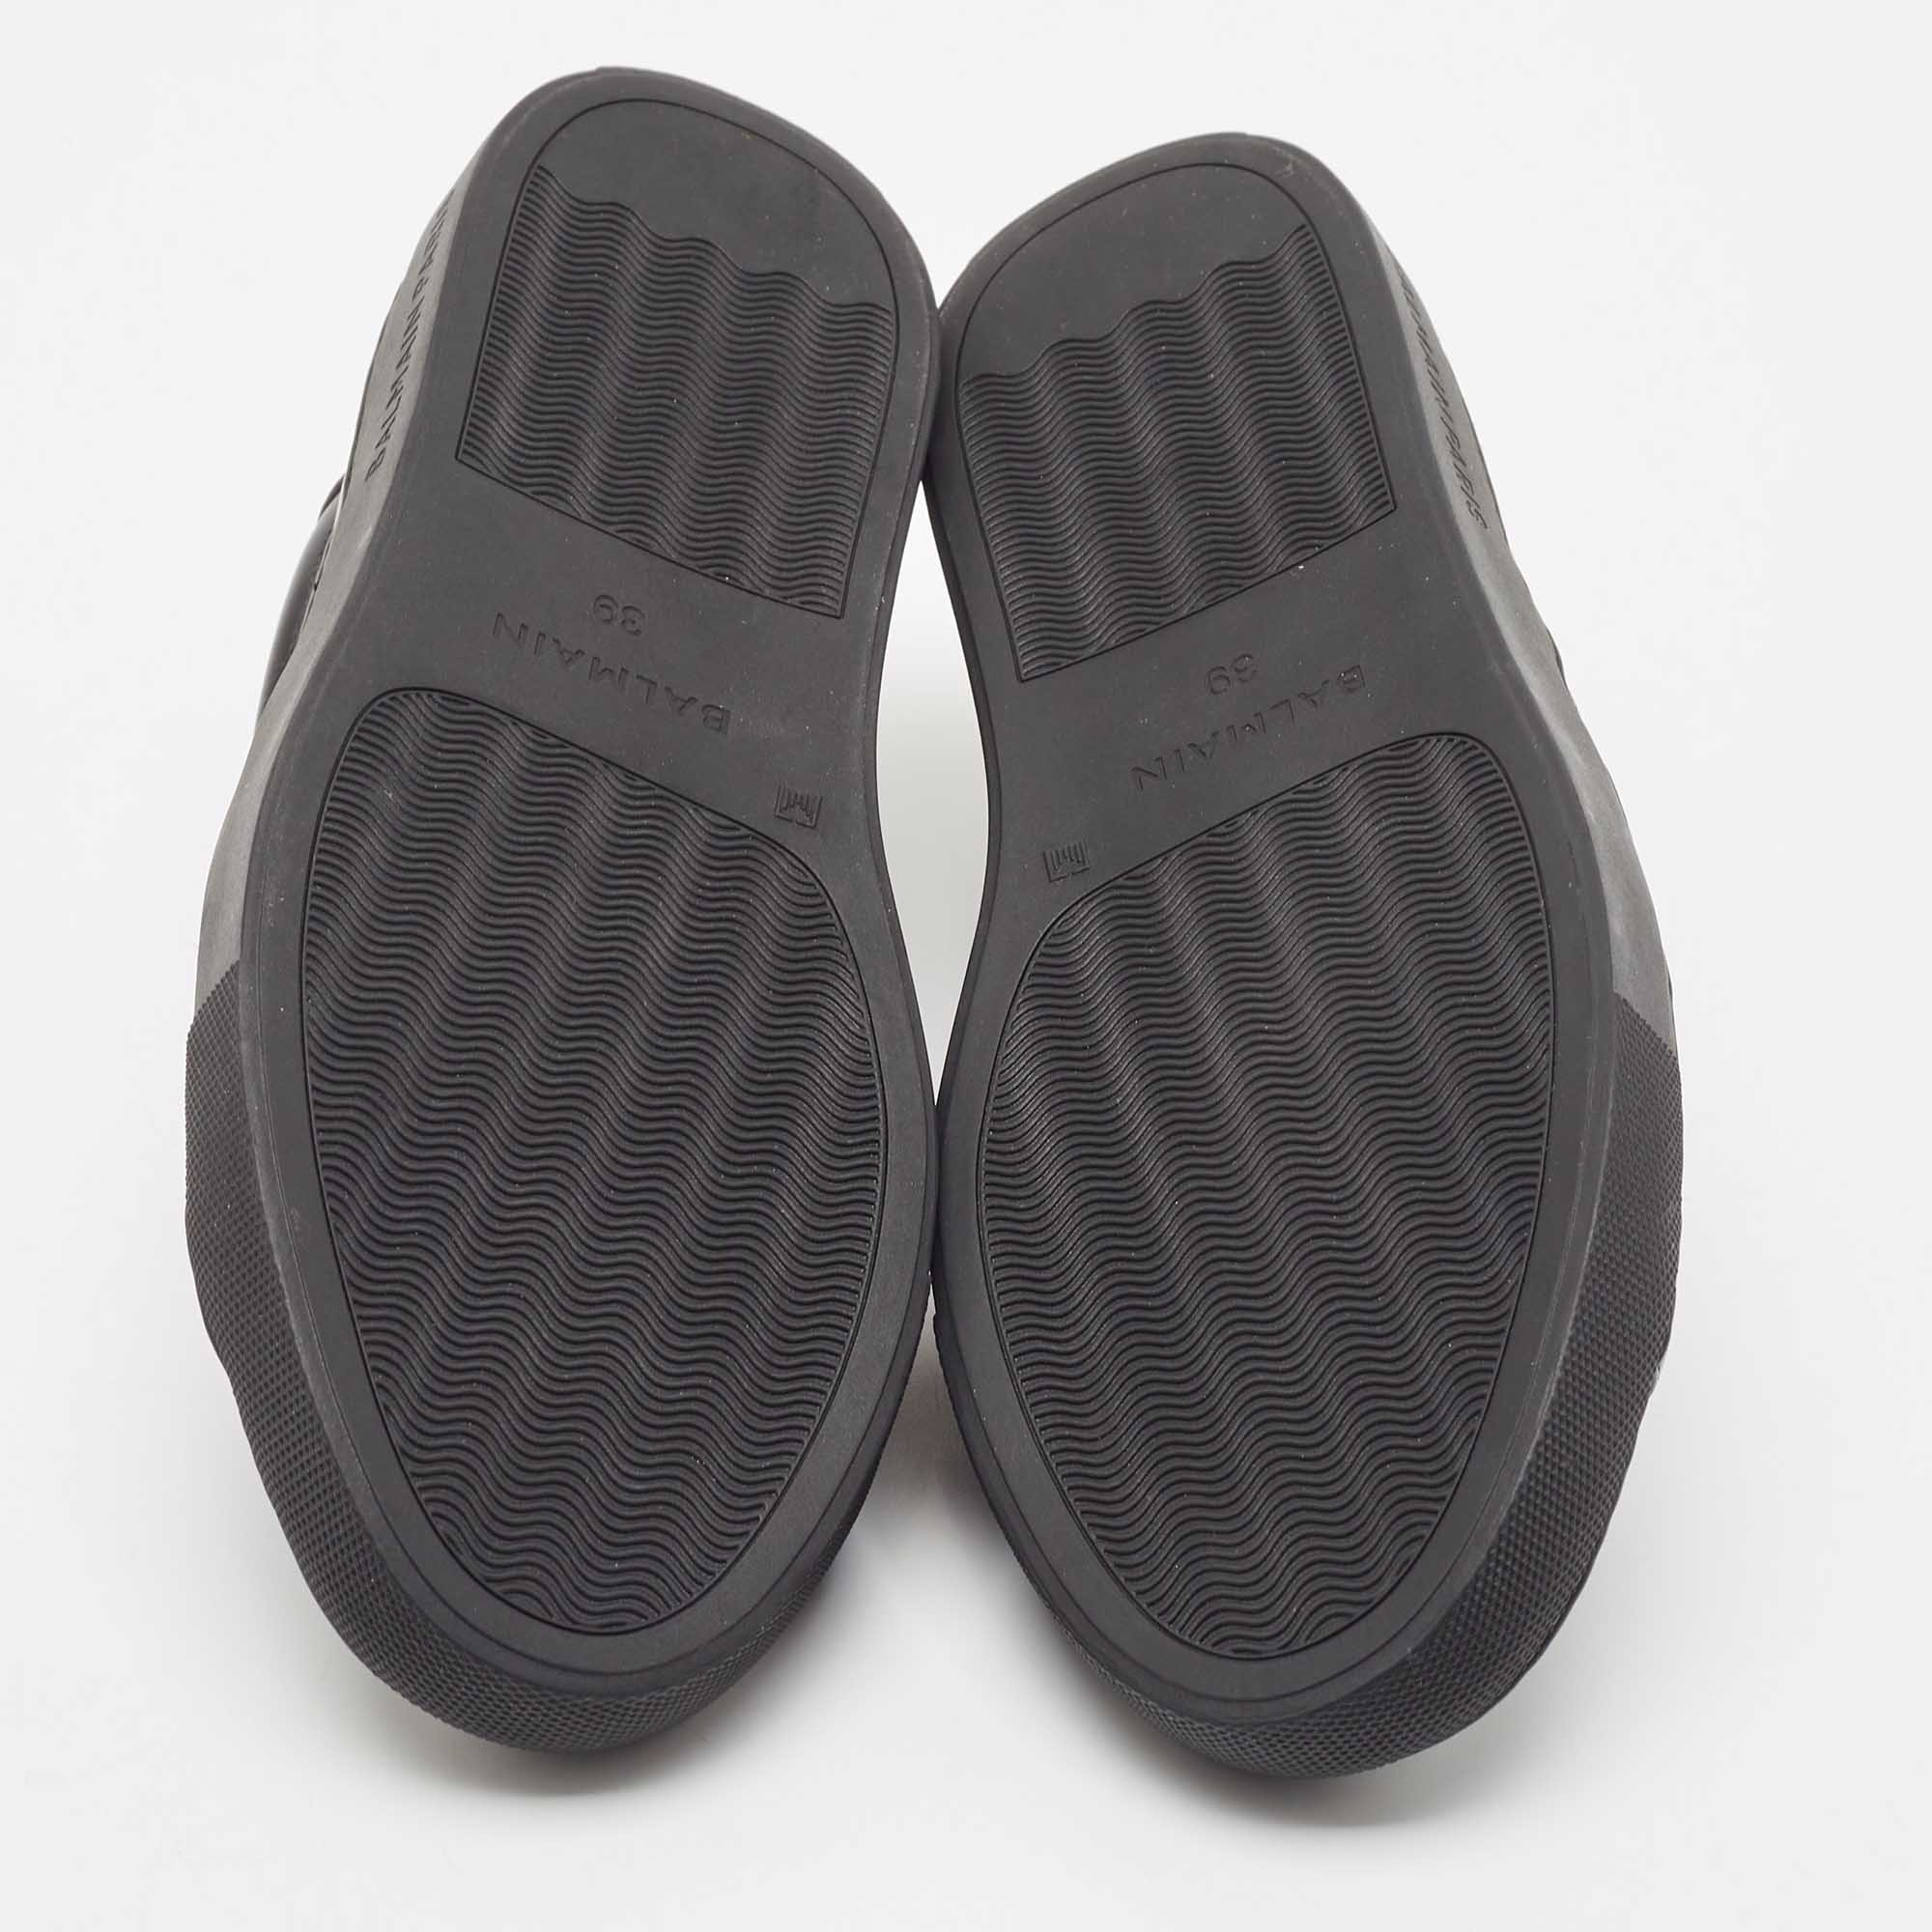 Balmain Black Leather Slip On Sneakers Size 39